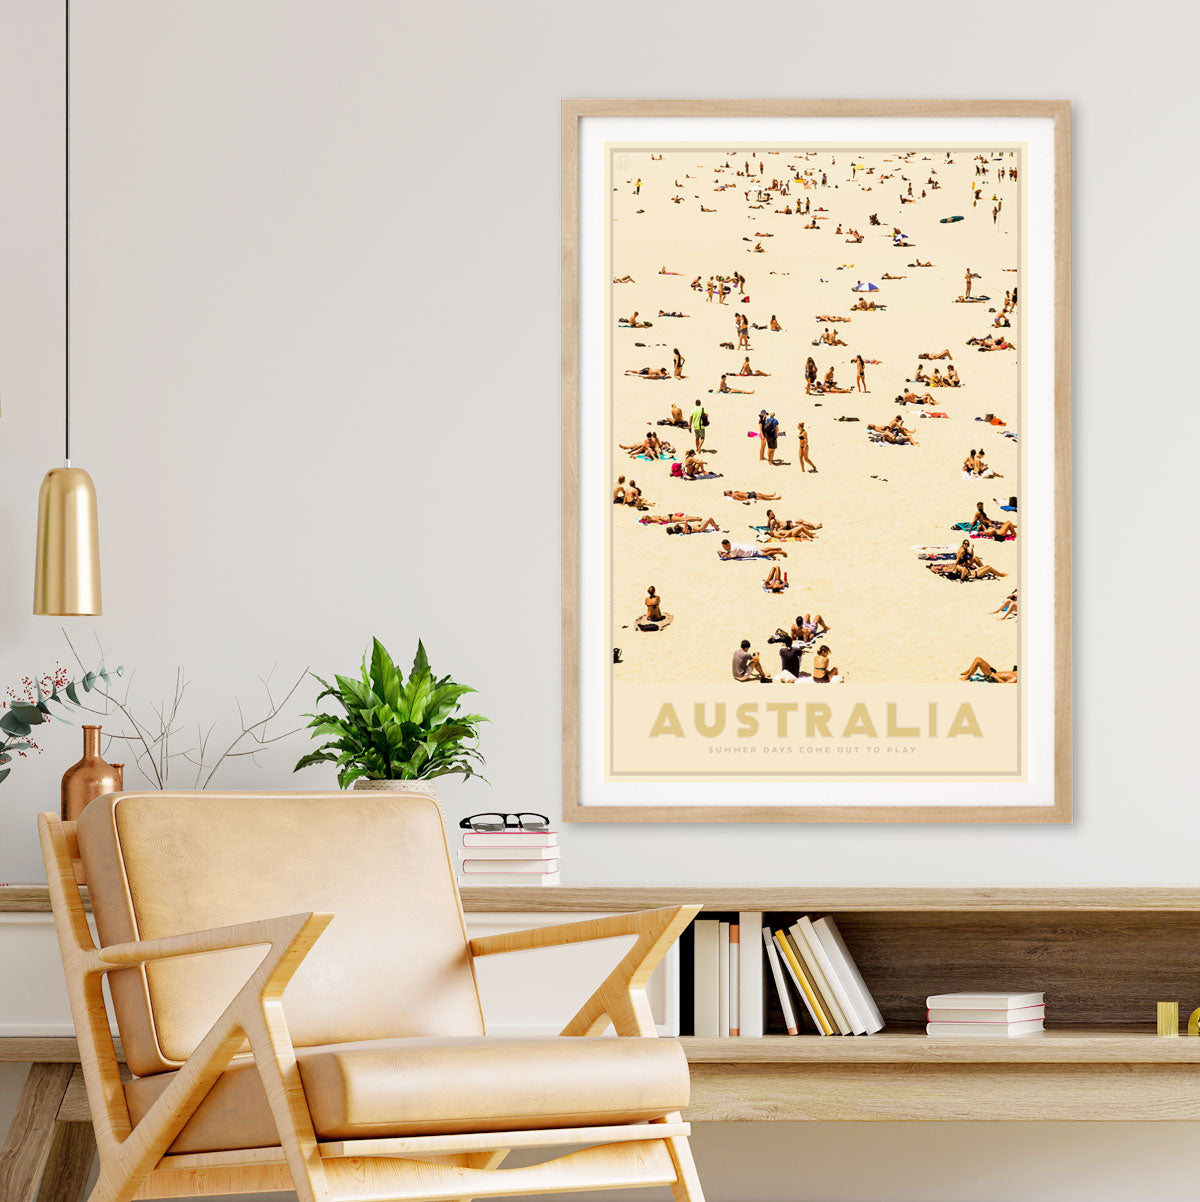 Australia Beach retro vintage print from Places We Luv